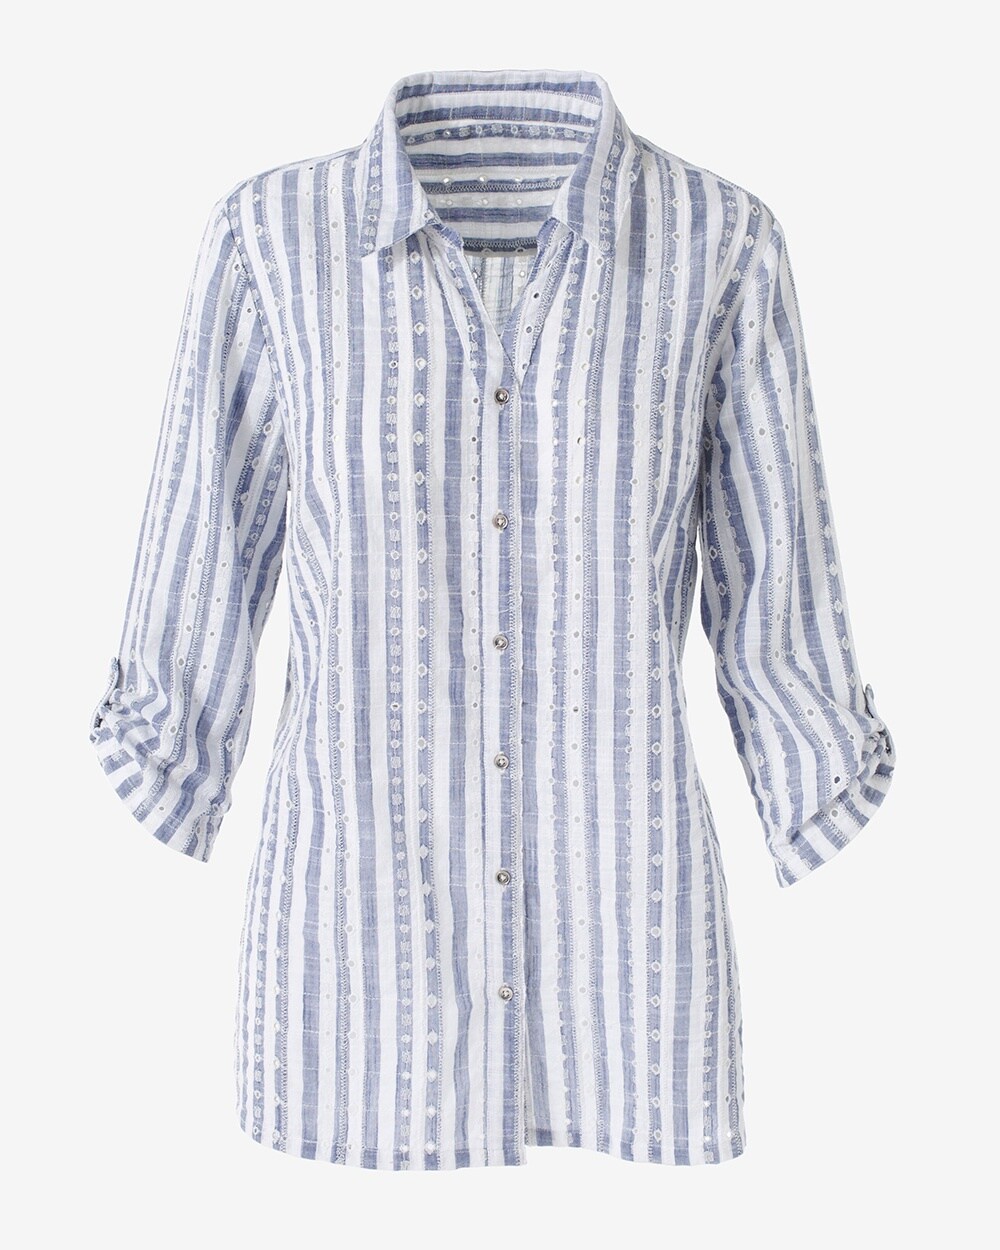 Eyelit Stripes Button-Up Shirt